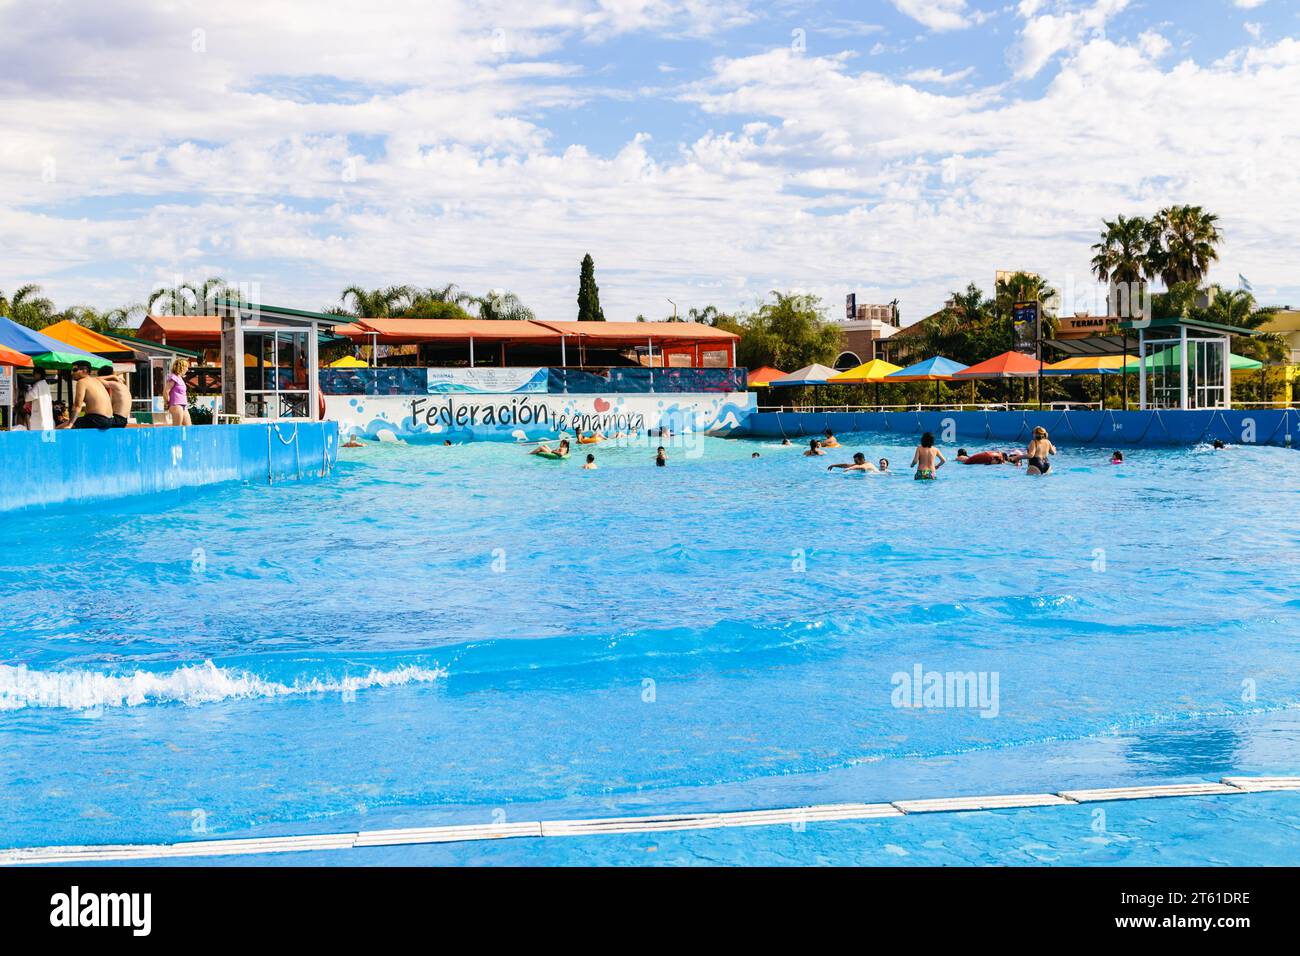 FEDERACION, ENTRE RIOS, ARGENTINA - 5 NOVEMBRE 2023: Vista della piscina con onde. La gente si diverte tra le onde artificiali. Foto Stock